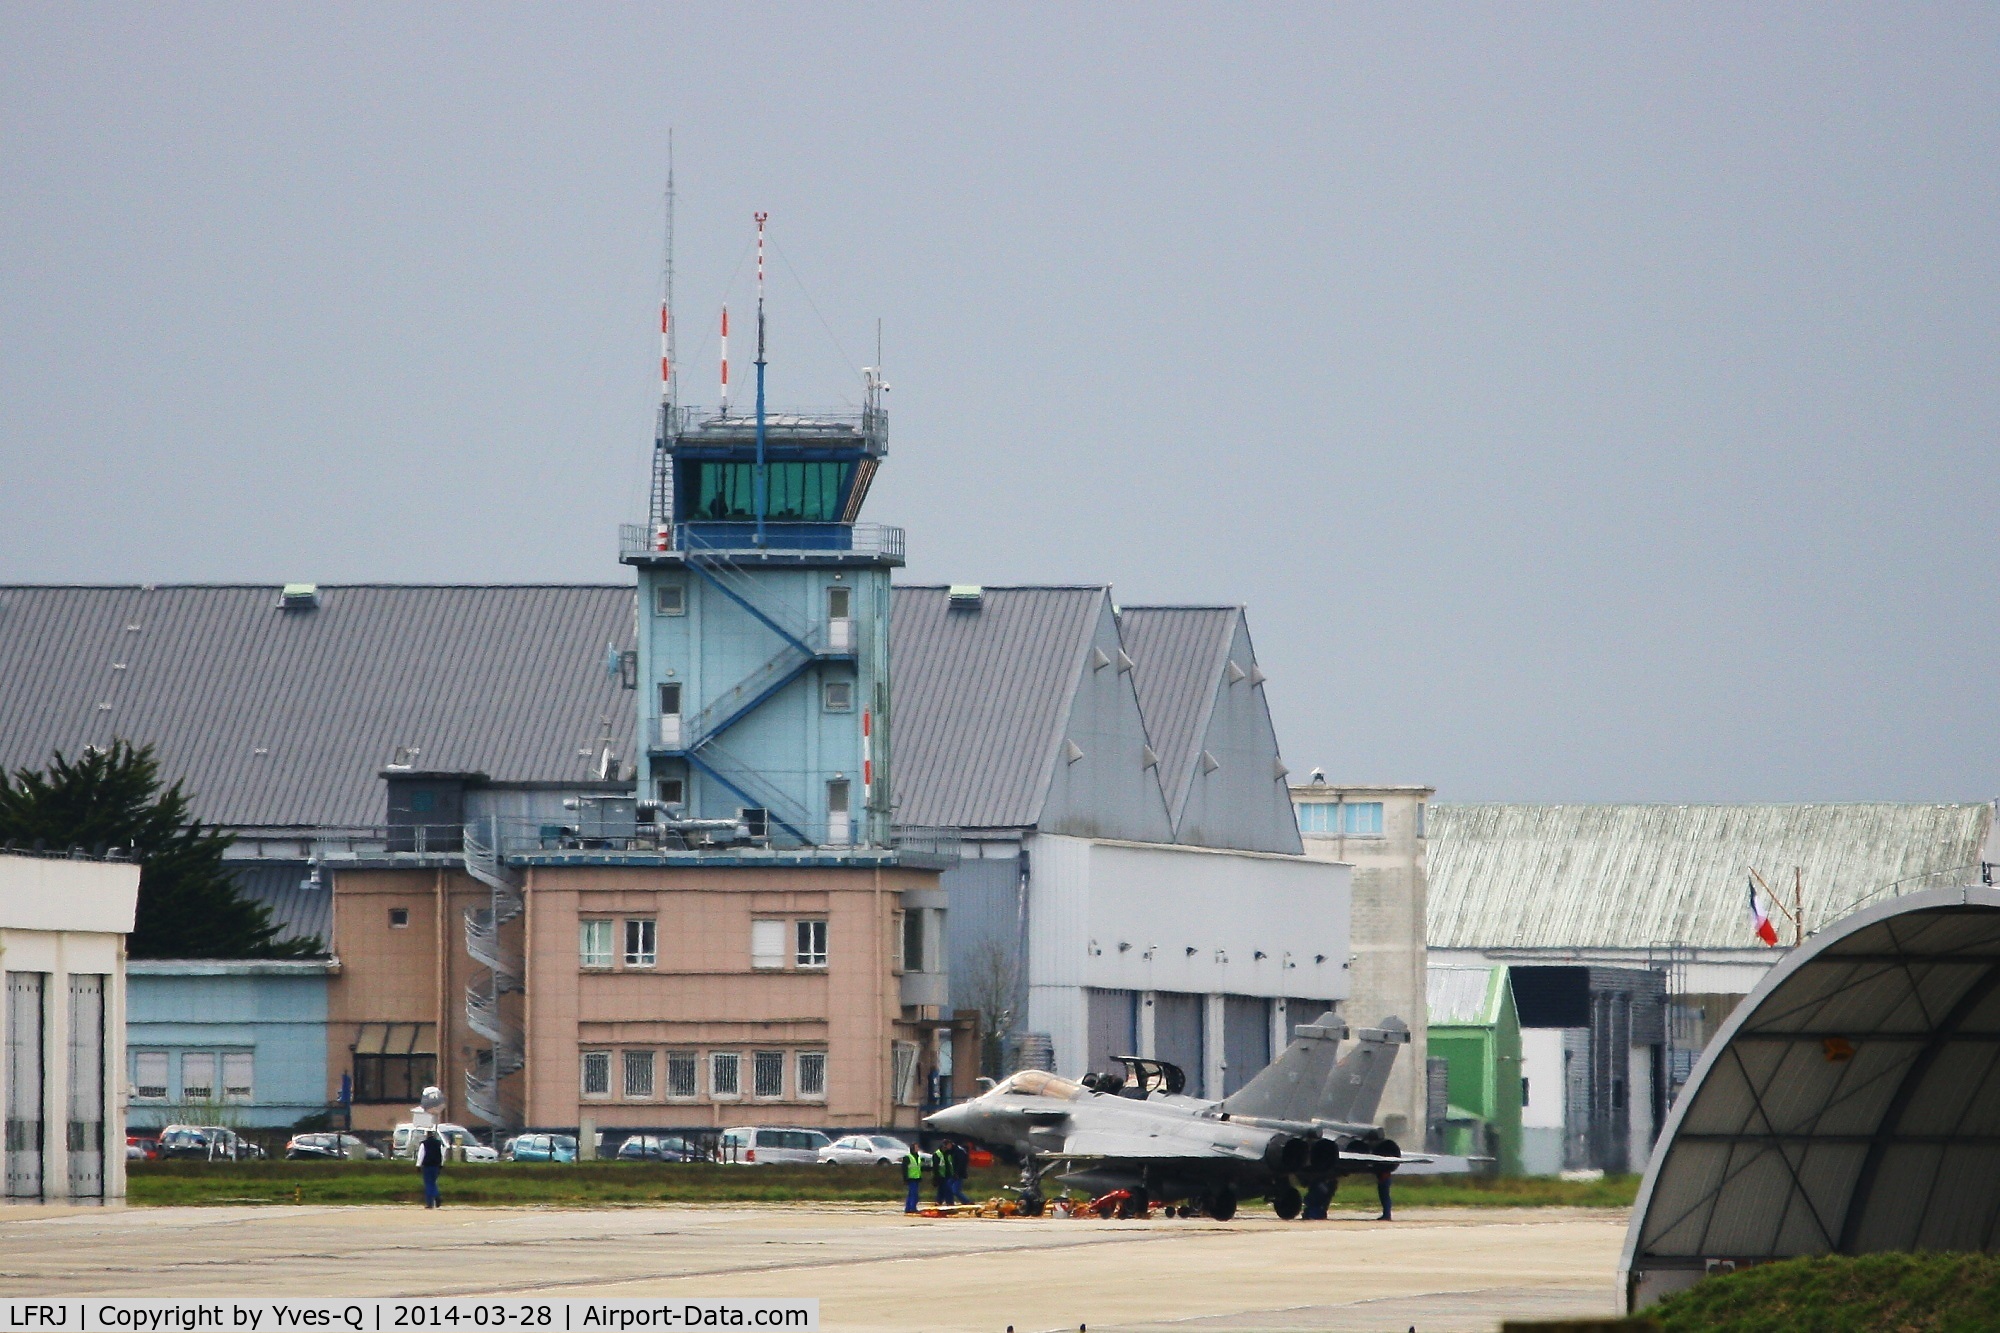 Landivisiau Airport, Landivisiau France (LFRJ) - Control tower, Naval Air Base Landivisiau (LFRJ)